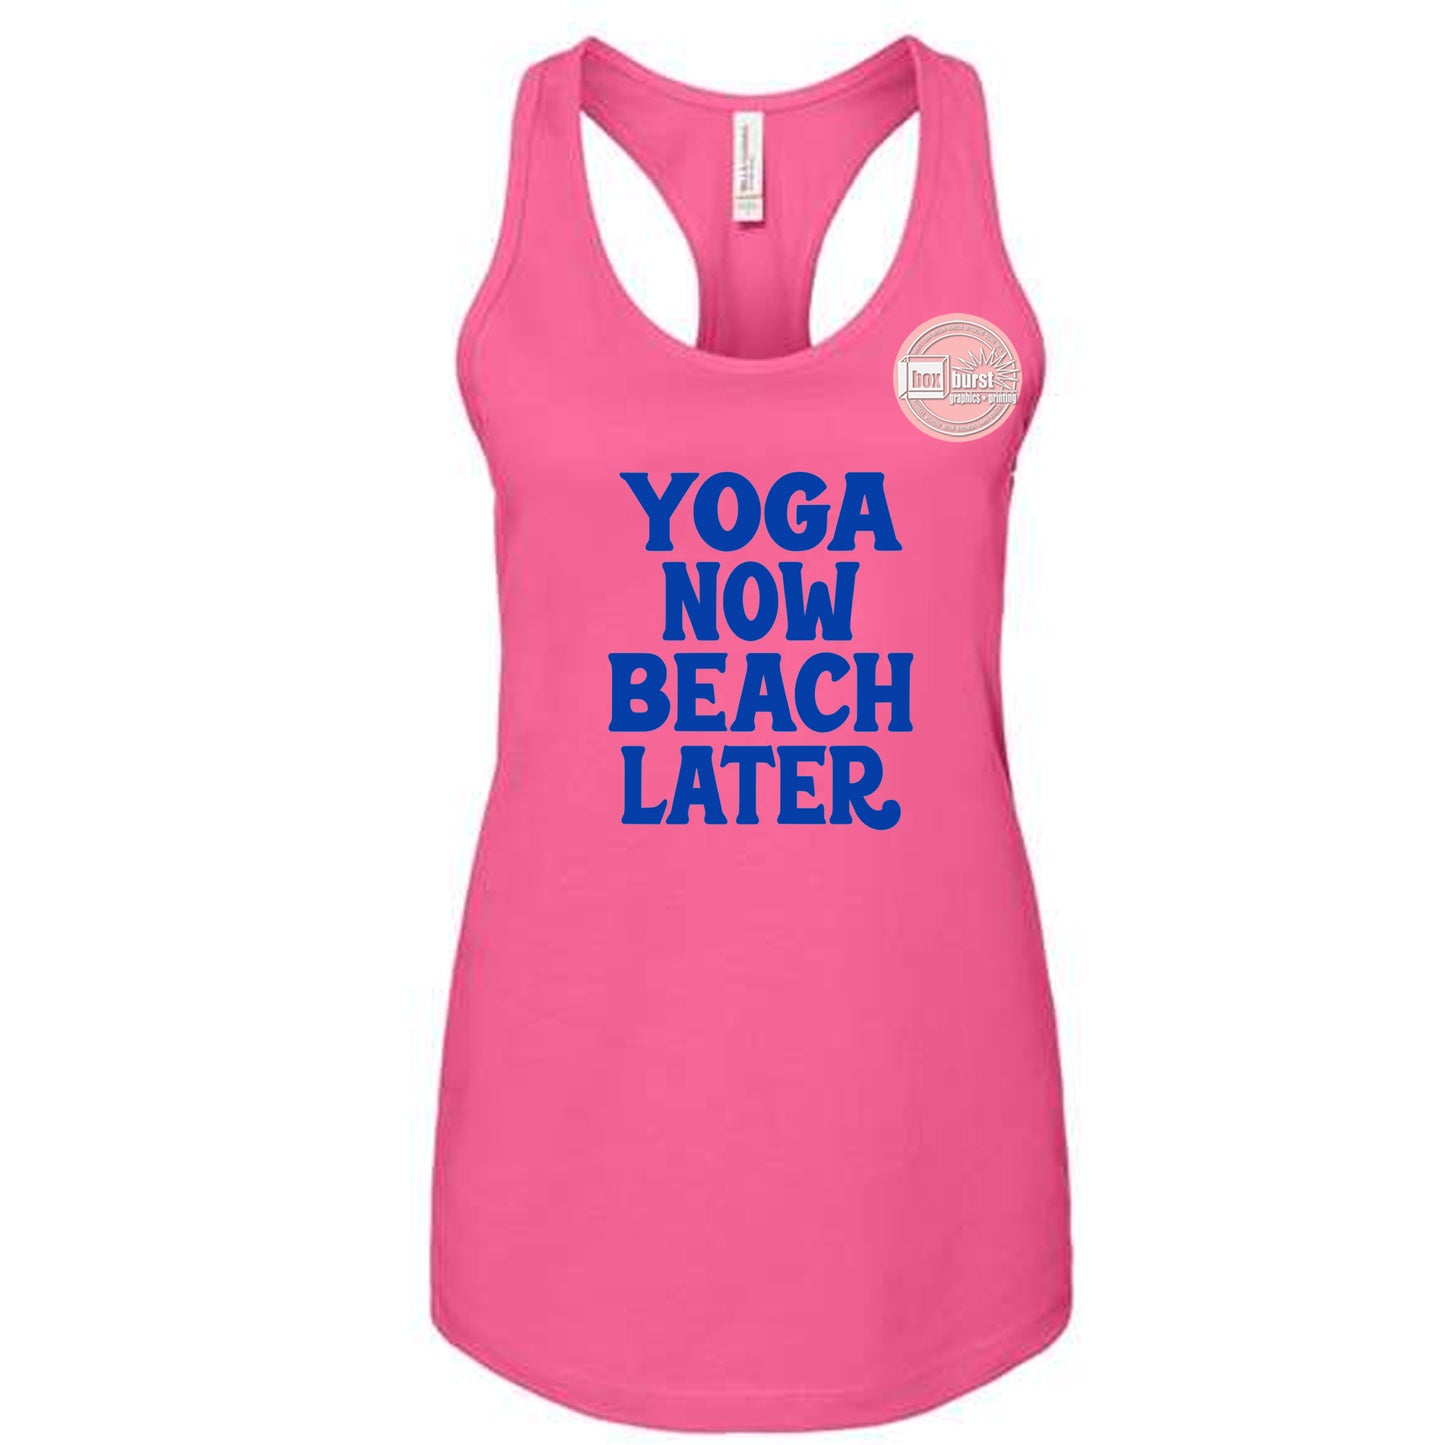 Yoga Now Beach Later tank top women's racerback tank